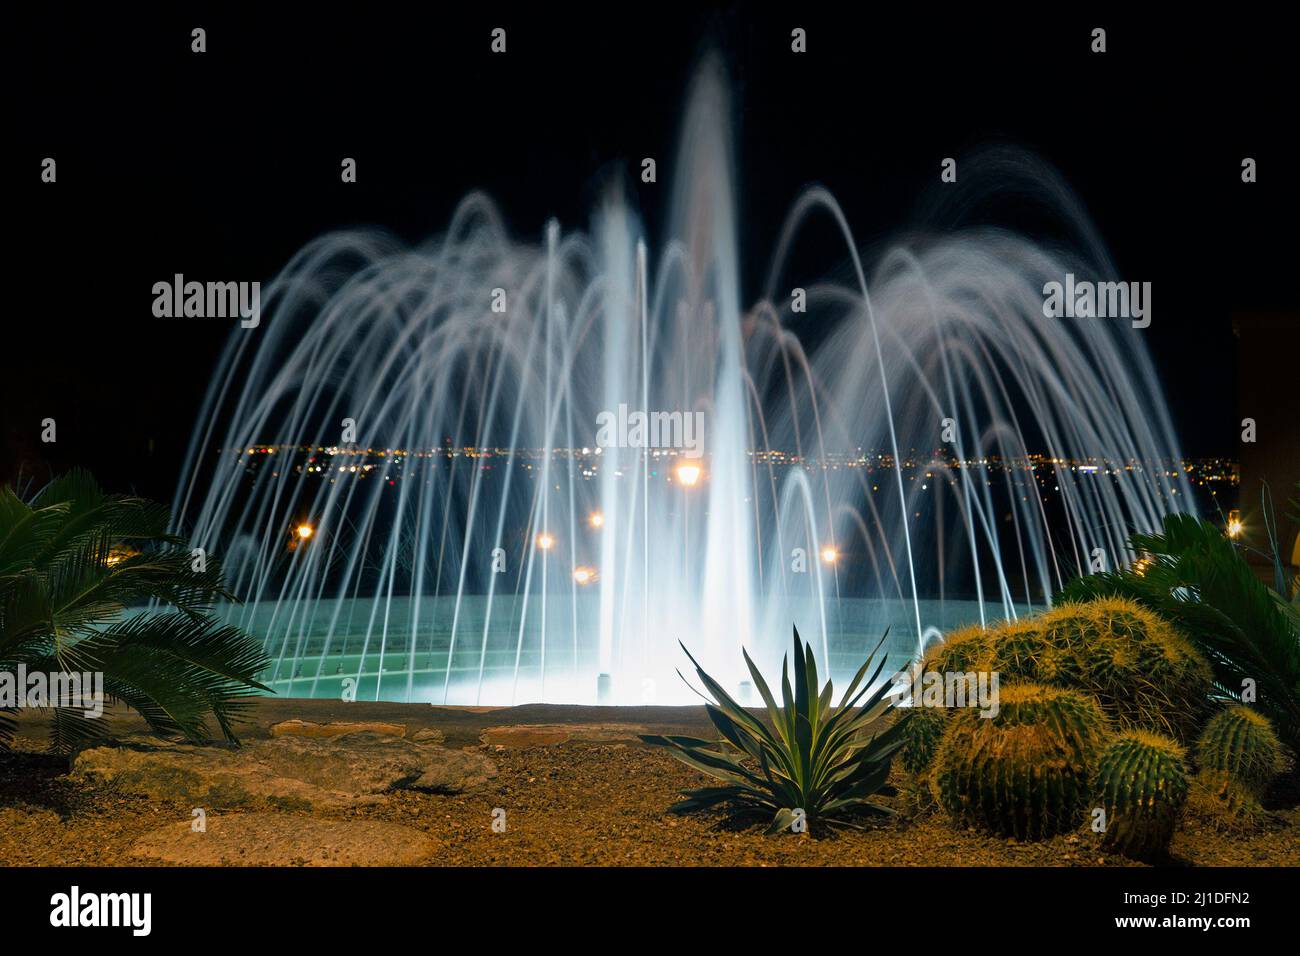 Fountain and cactus garden in the desert at night, Tucson, Arizona Stock Photo